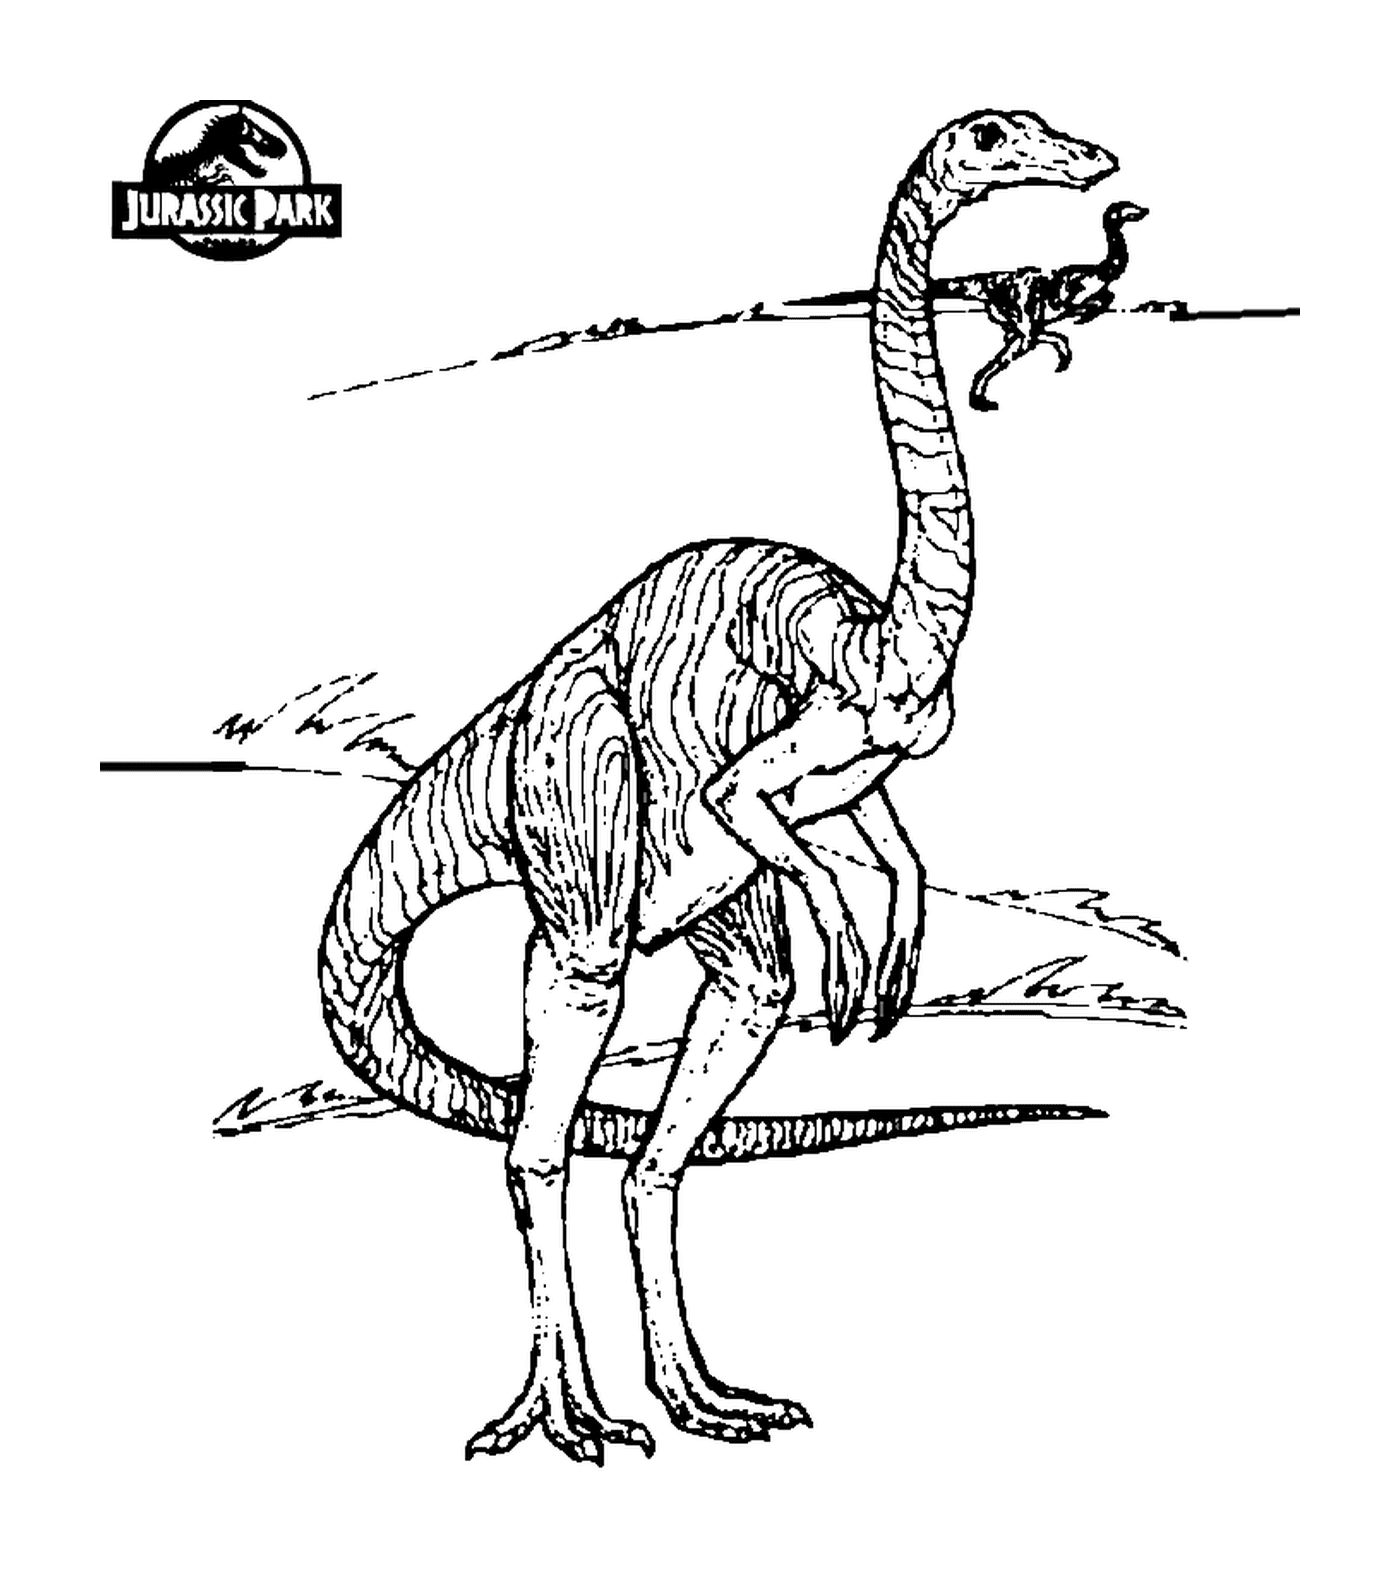   Jurassic Park, l'art de l'illustration 